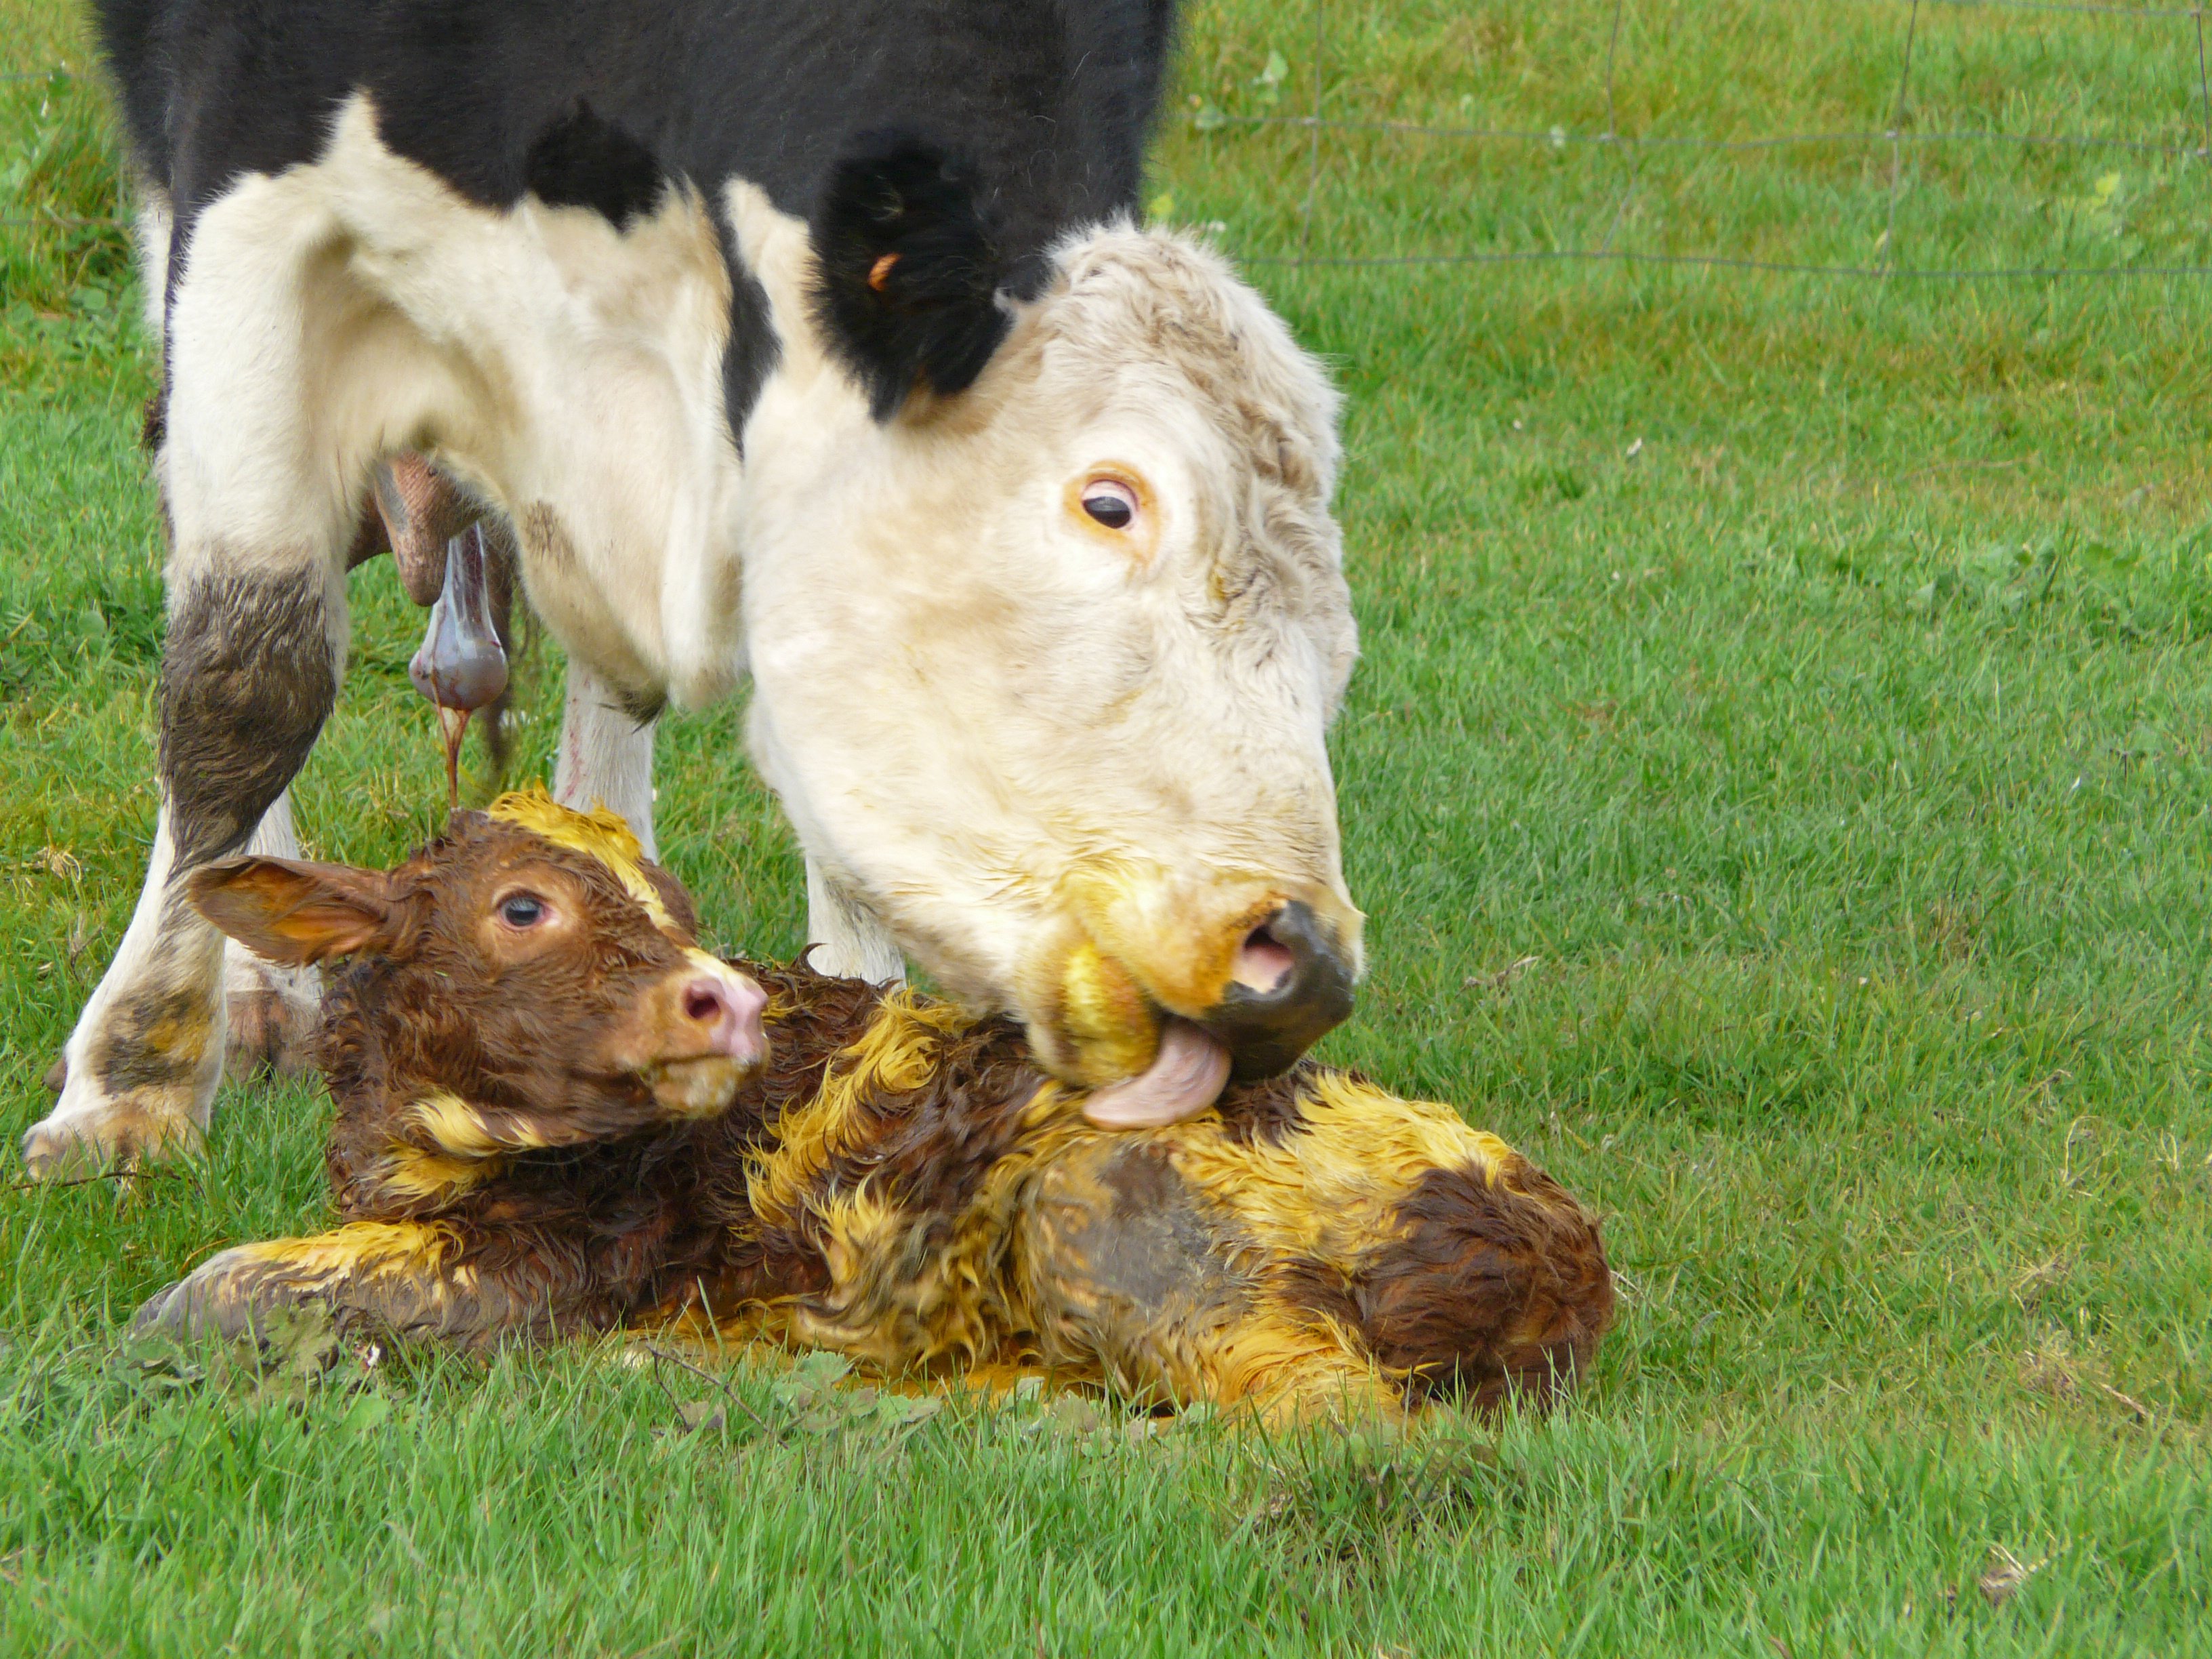 Kuh beleckt Kalb nach Geburt auf der Weide